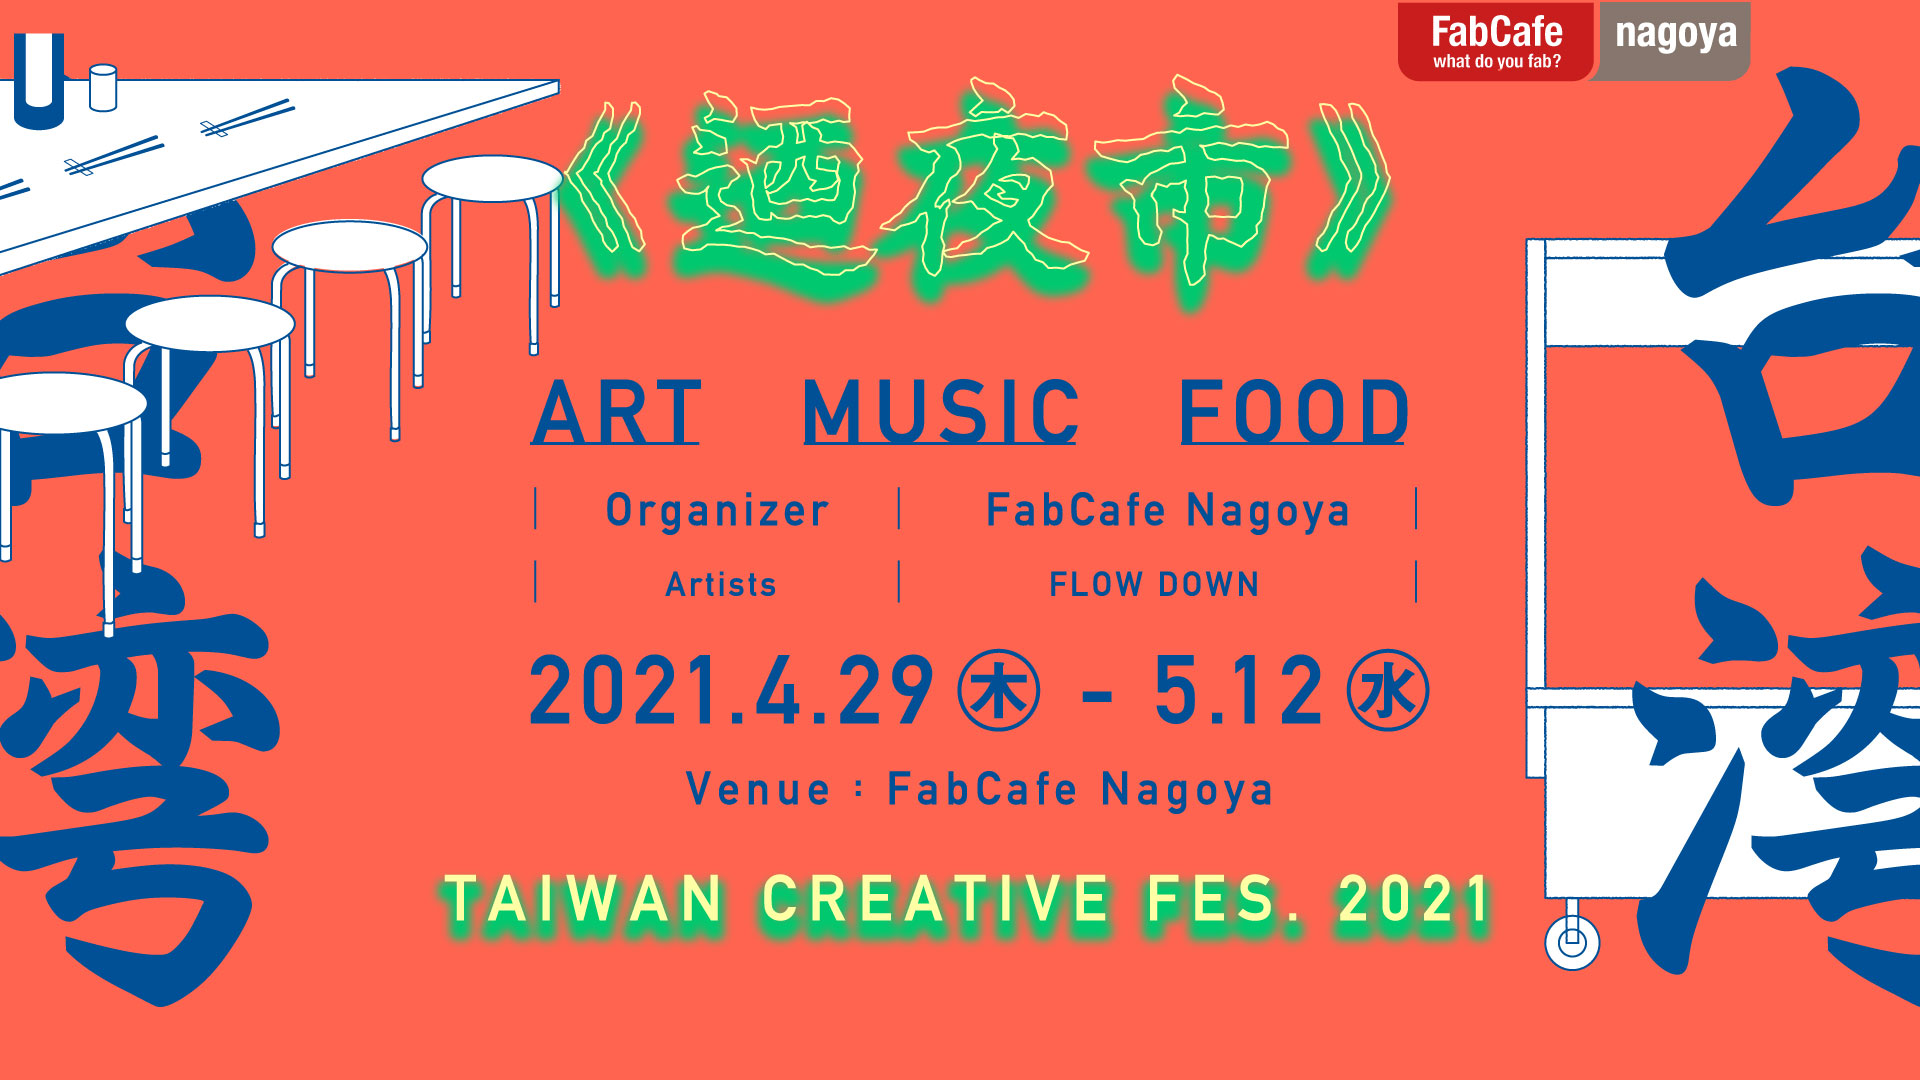 Fabcafe Nagoyaで台湾の今を感じるクリエイティブイベント 迺夜市 Taiwan Creative Fes 21 開催 ロフトワークのプレスリリース